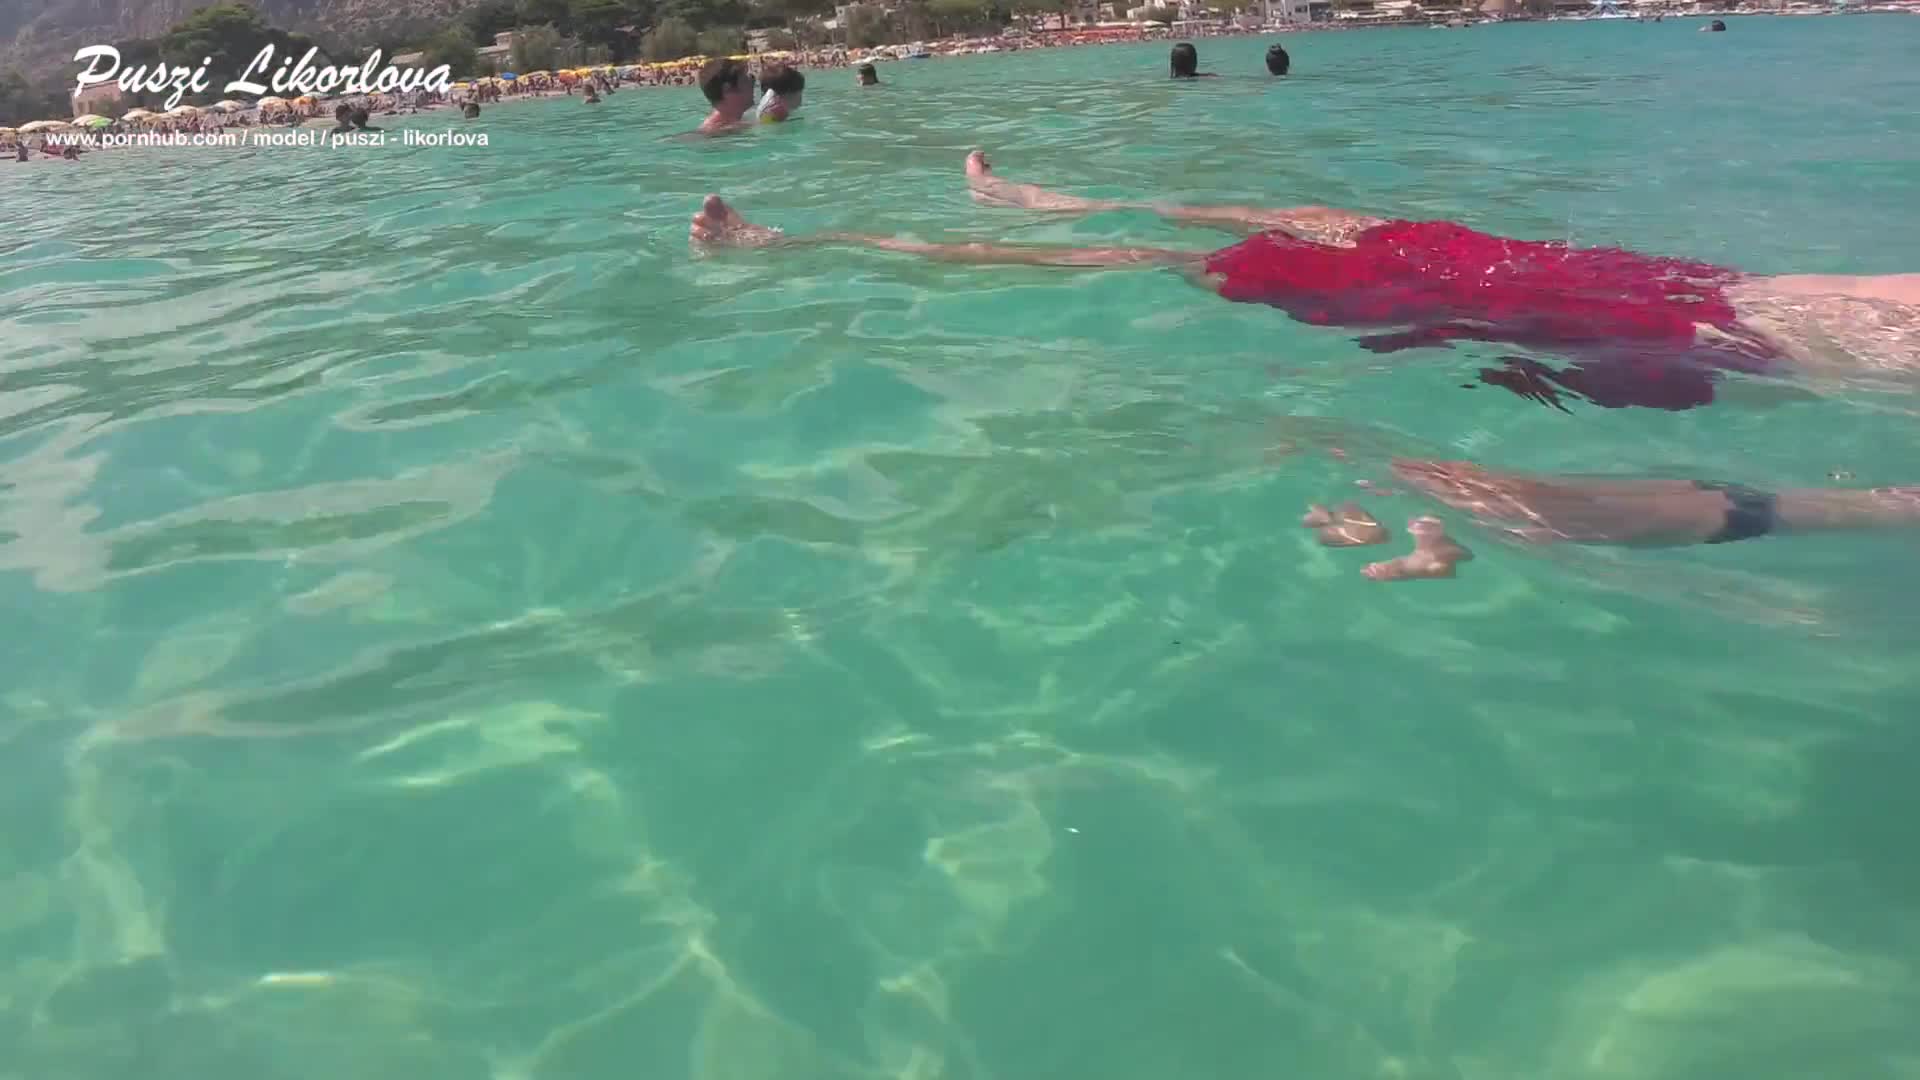 Paja pública de Puszi Likorlova - sexo bajo el agua con una estrella porno húngara - Videos